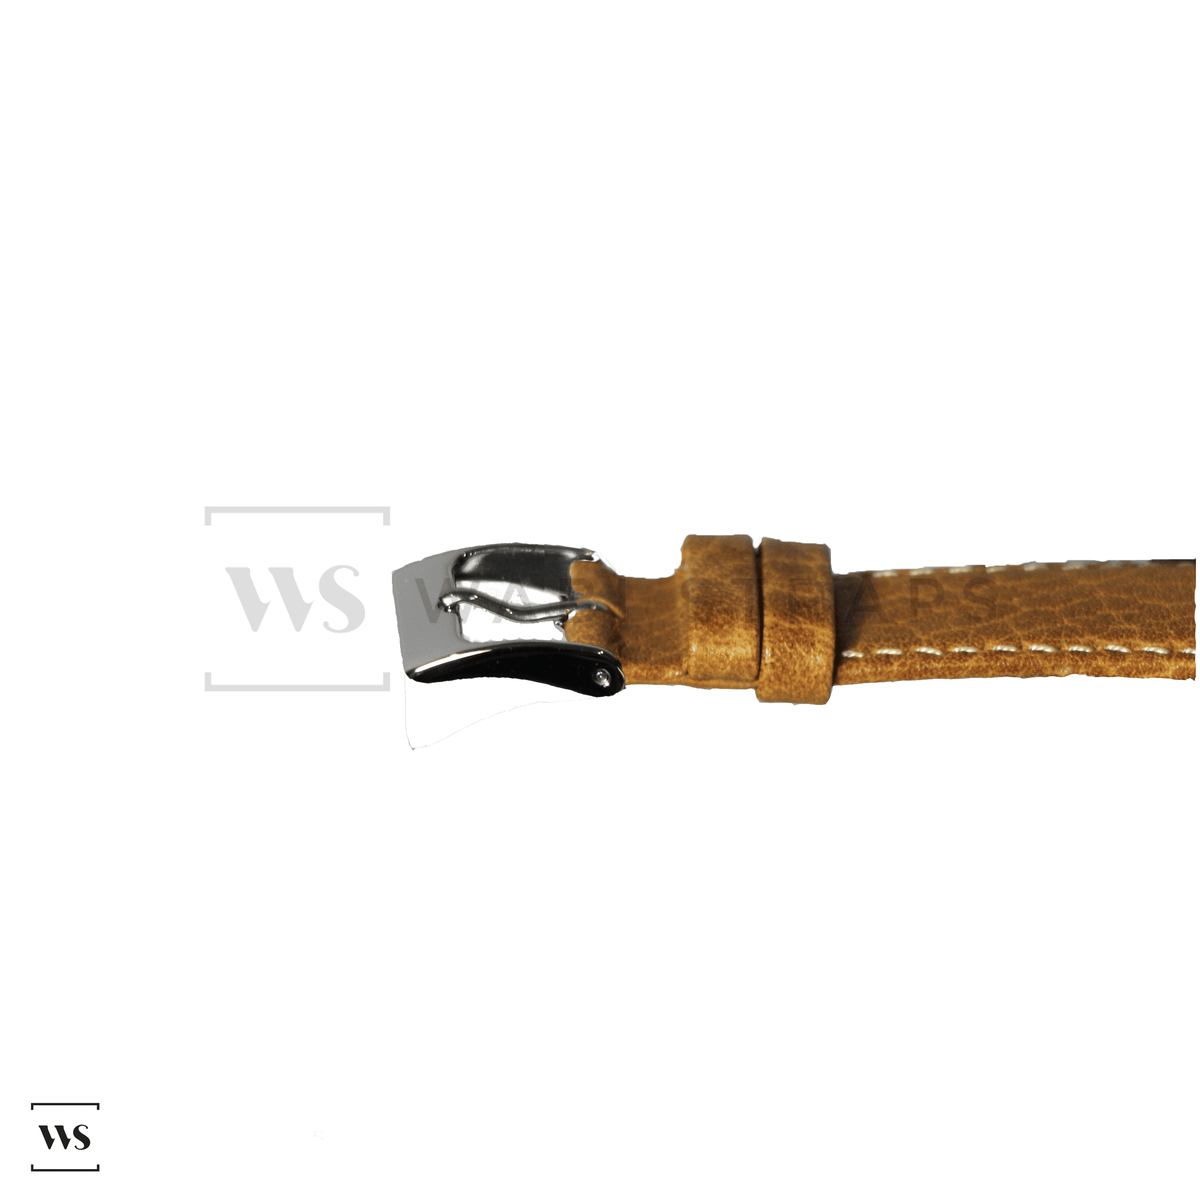 Palermo Handmade Leather Watch Strap (Coffee) – Kingsbury Watch Co.